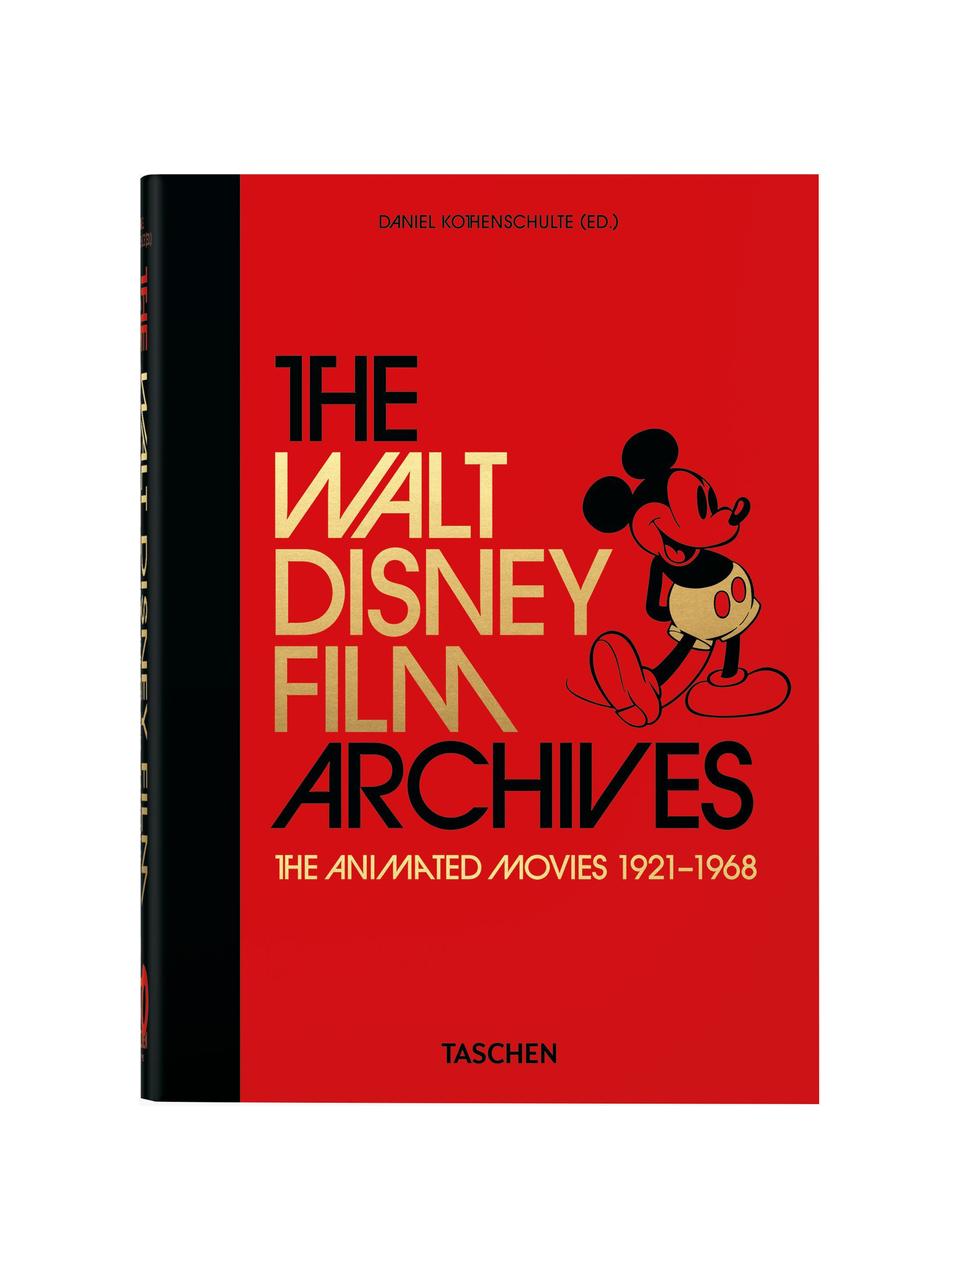 Libro illustrato The Walt Disney Film Archives